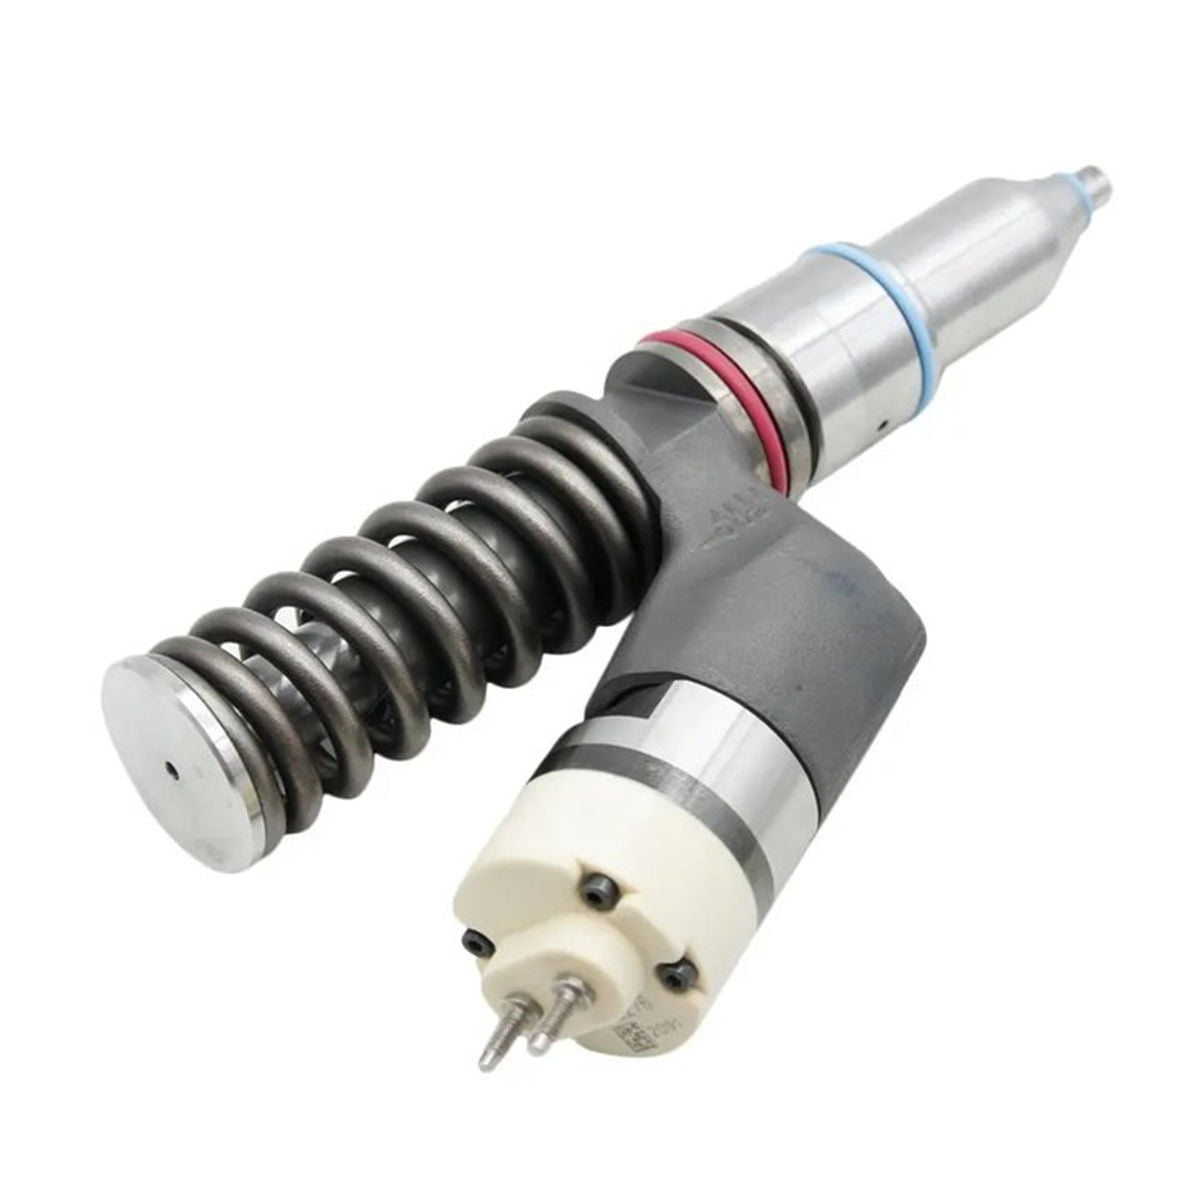 374-0750 Diesel Fuel Injector for Caterpillar Engine C15 - Sinocmp